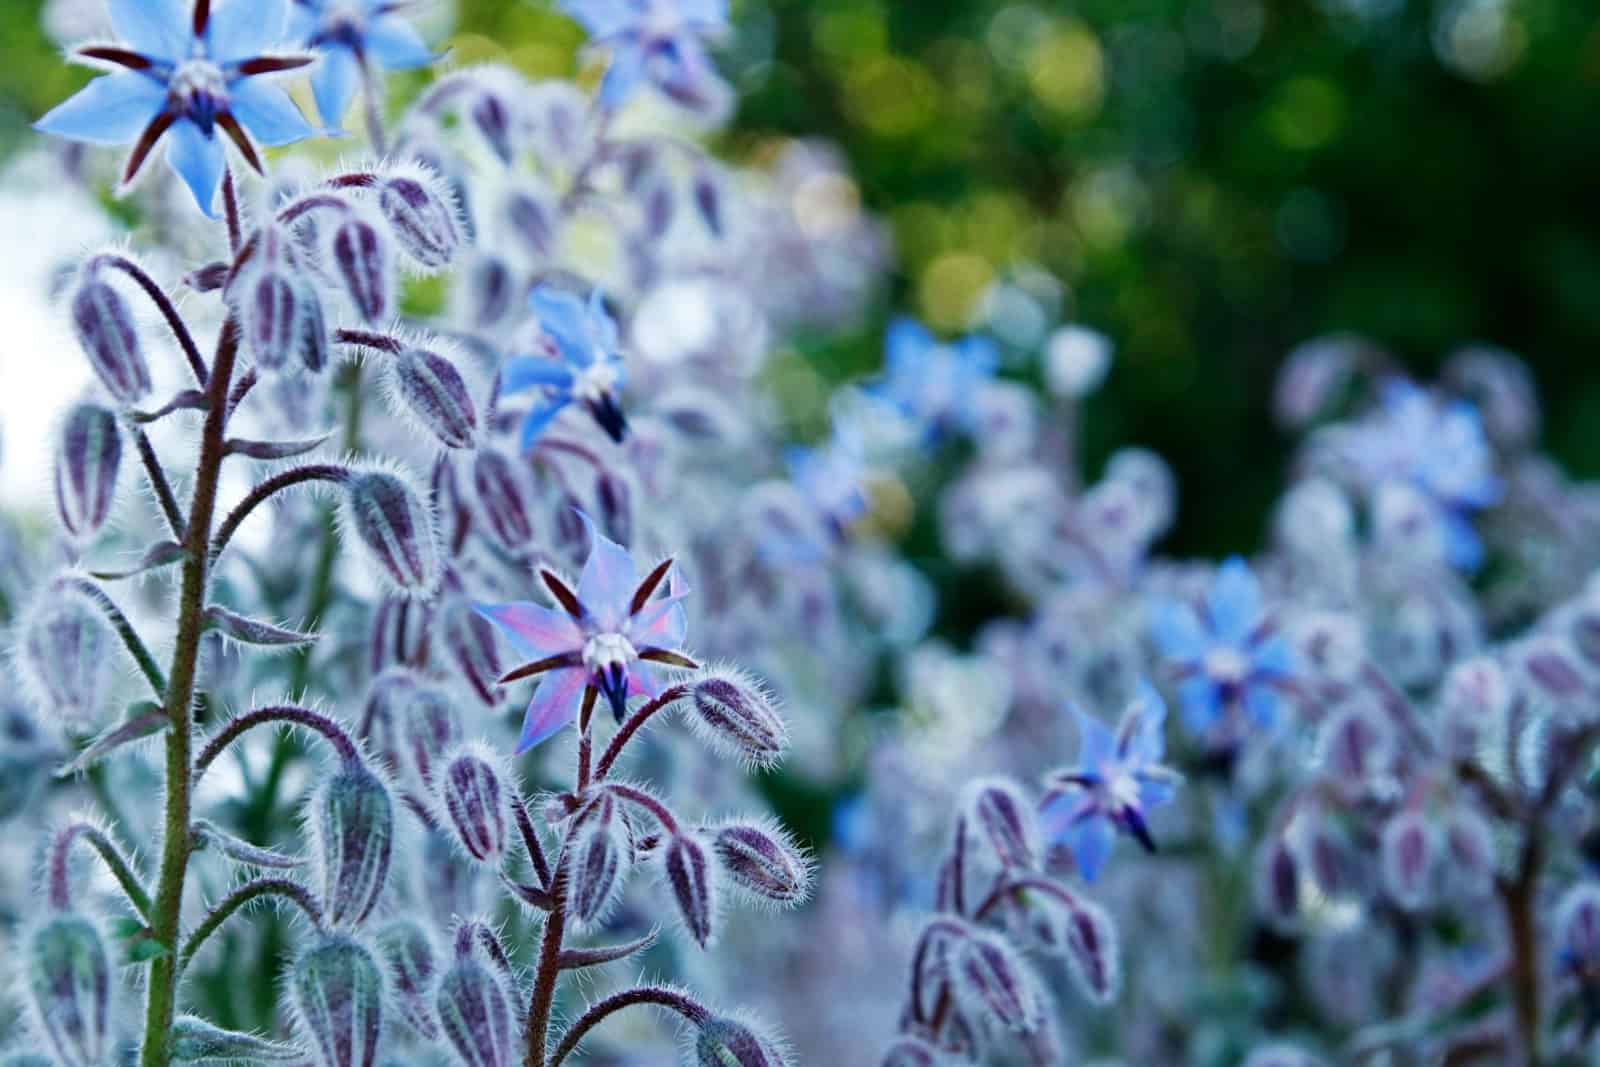 Blue and purple borage flowers